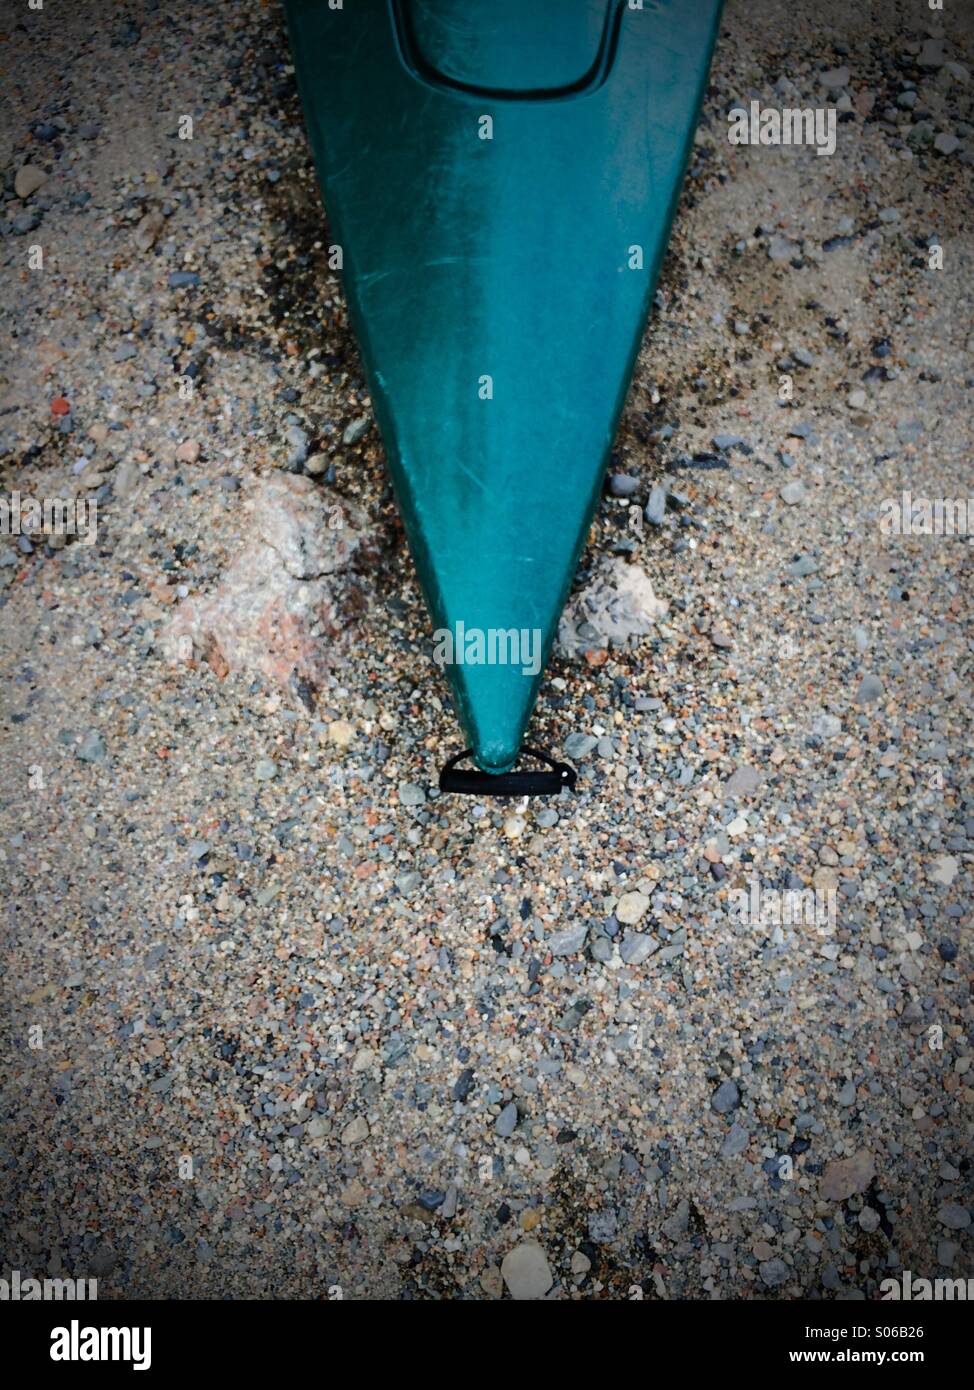 Green bow of kayak on beach Stock Photo